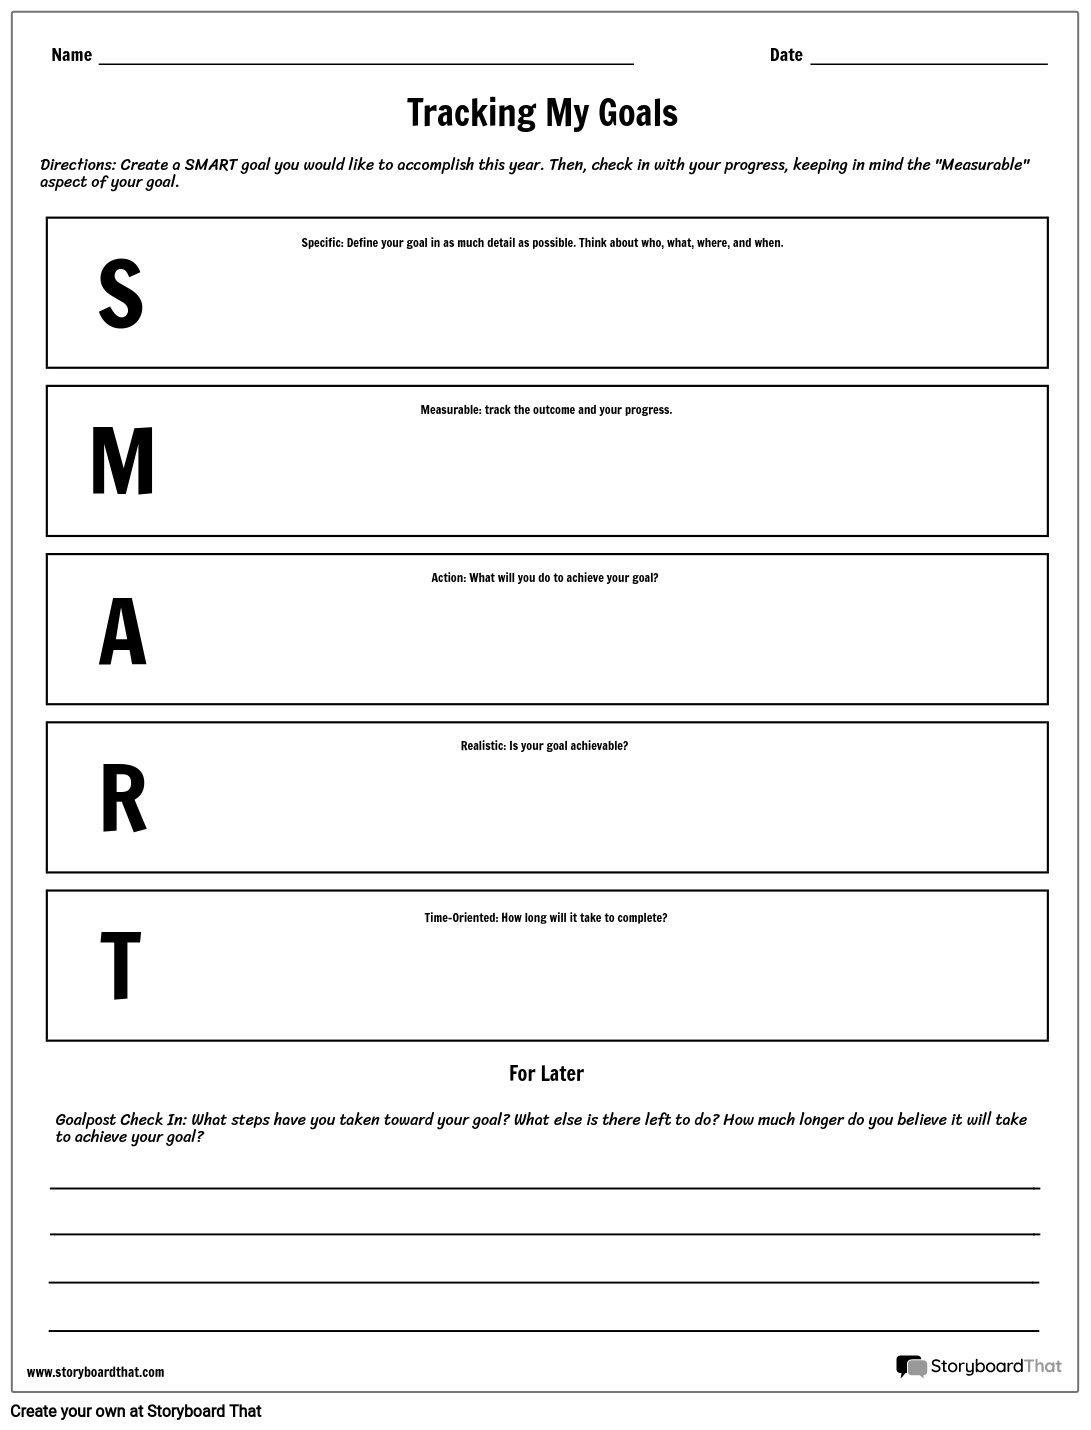 making-smart-goals-goal-setting-worksheet